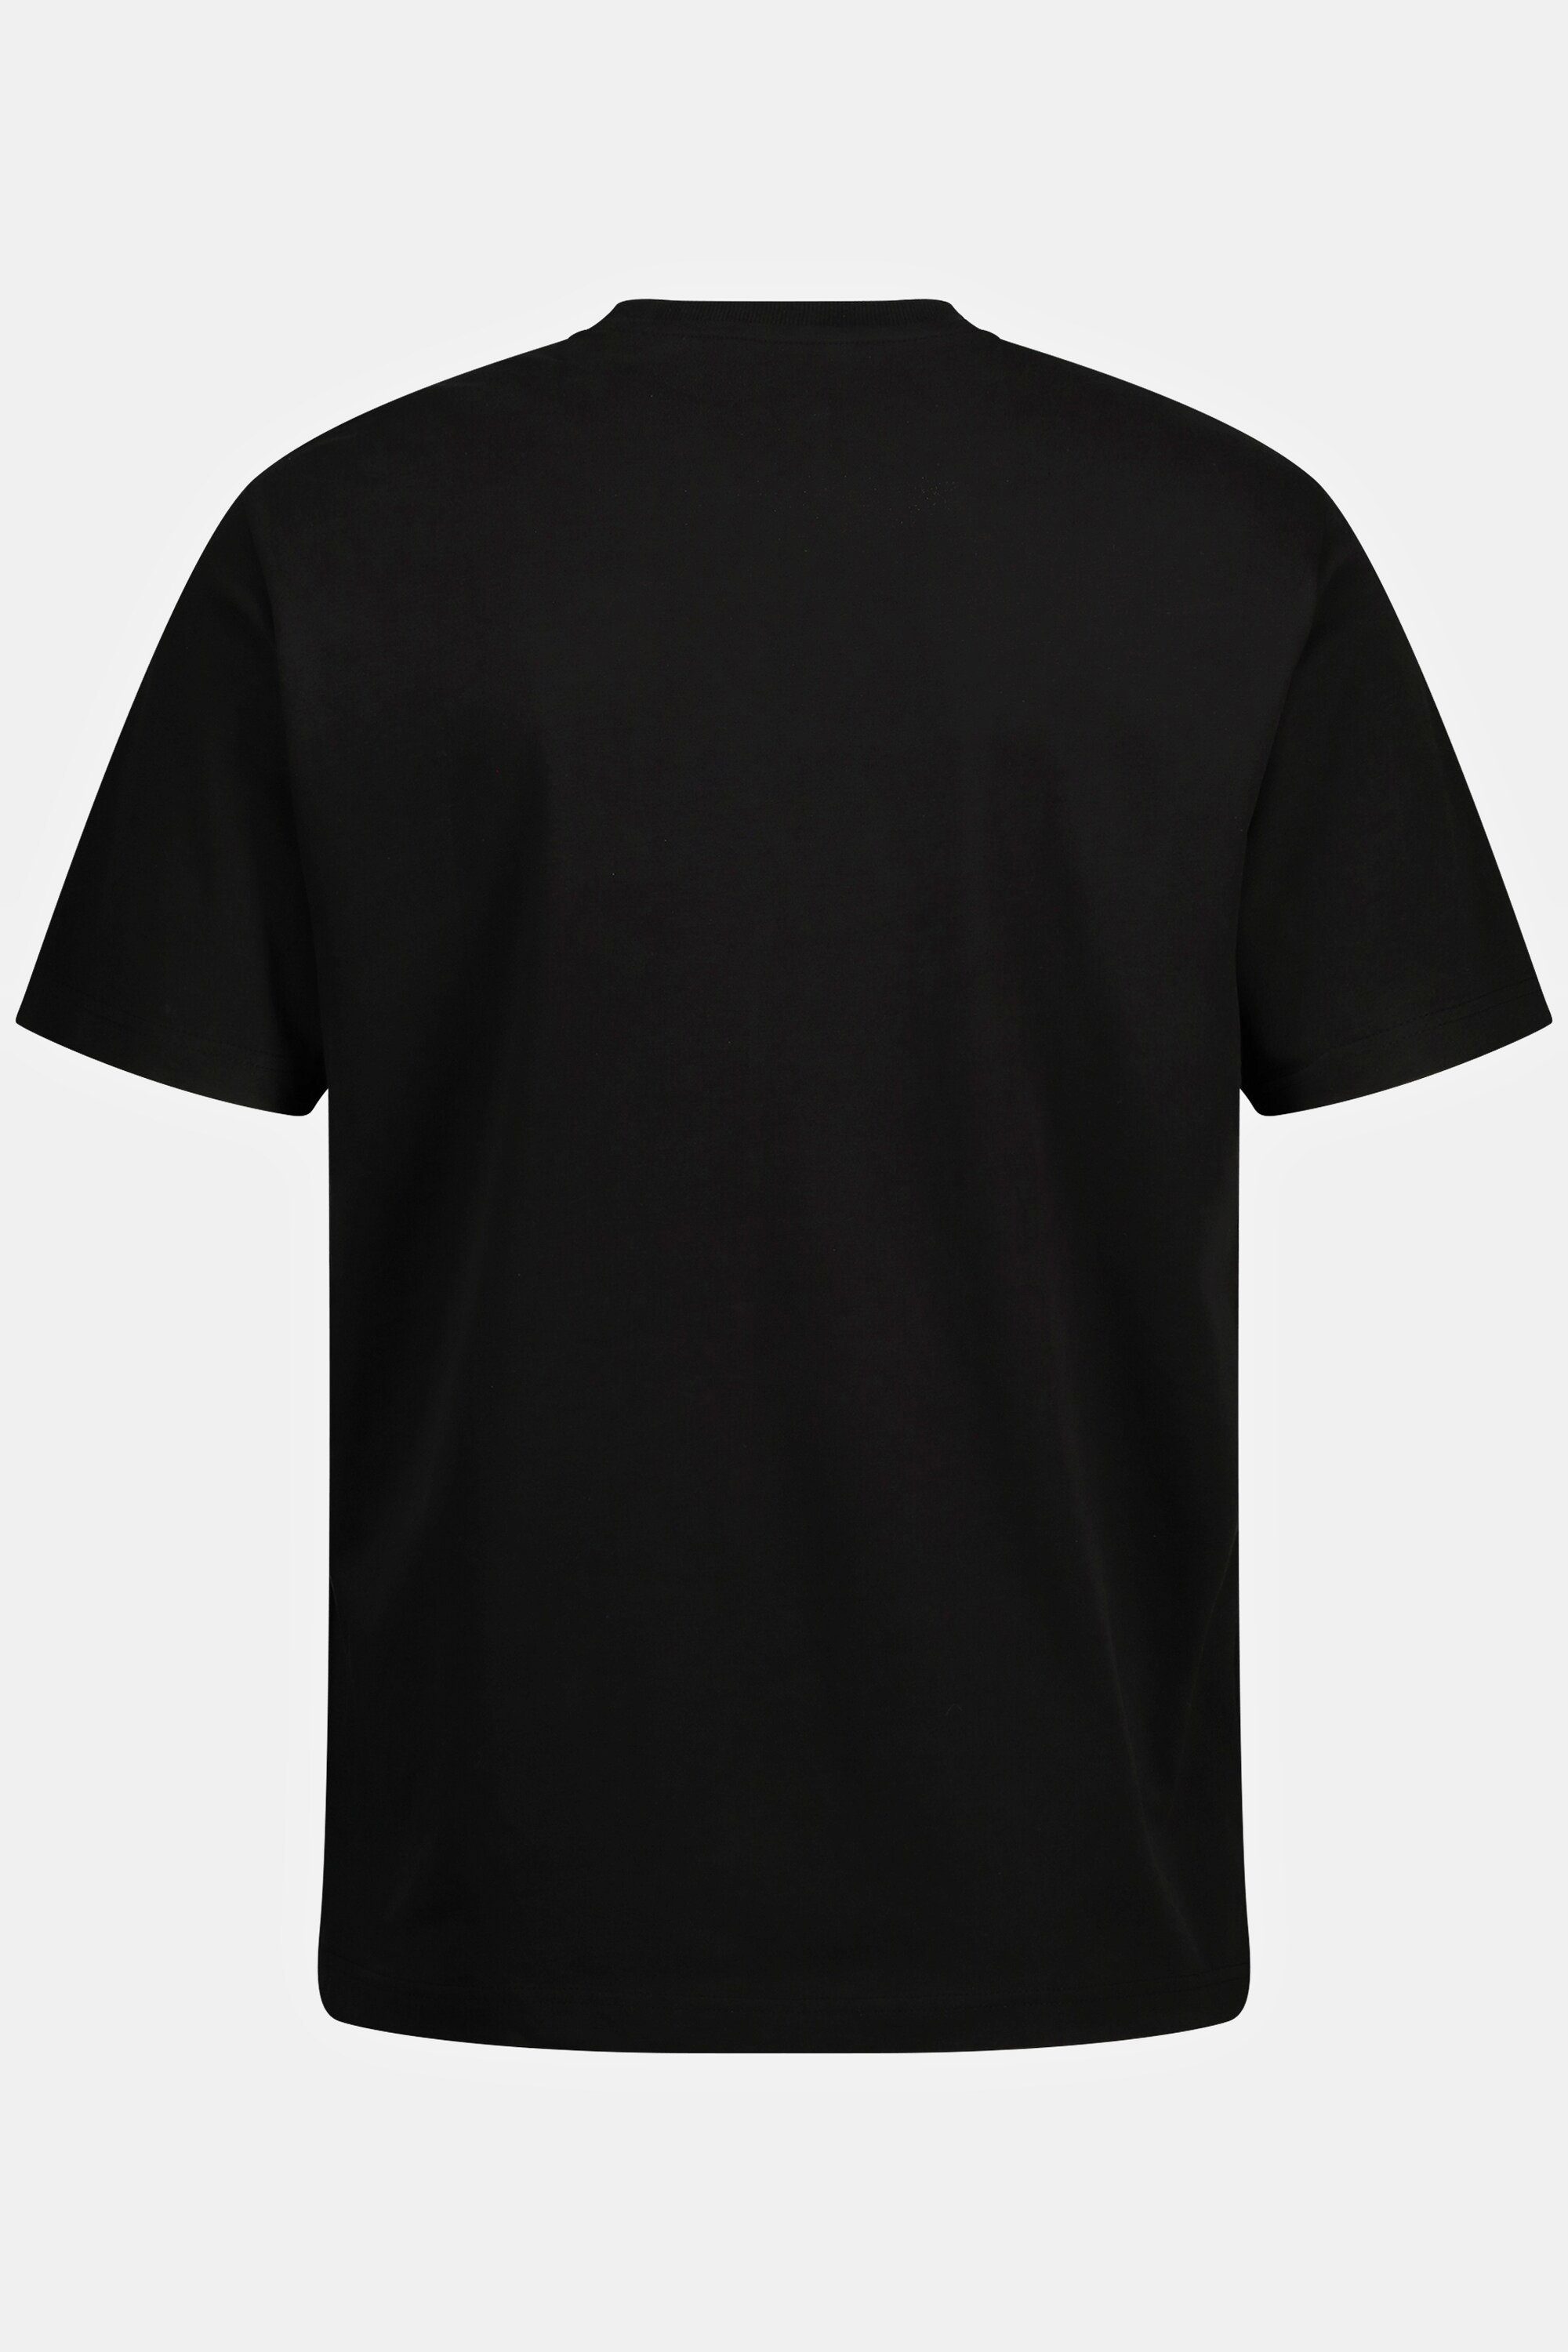 JP1880 T-Shirt T-Shirt Print Halbarm Rundhals Lodge 8 XL bis